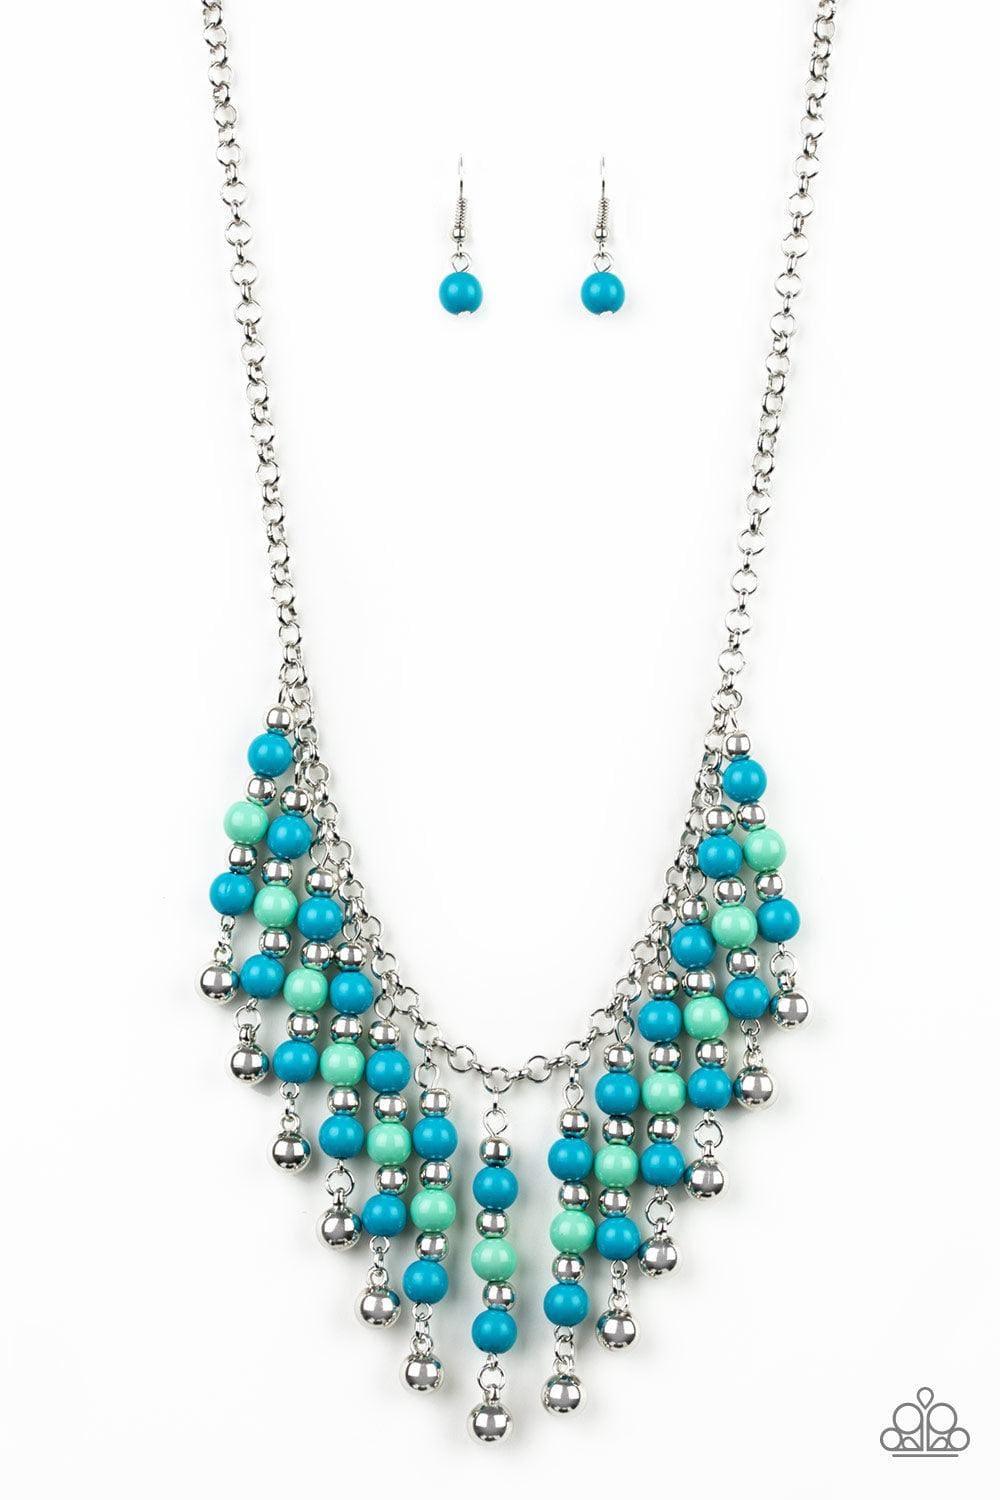 Paparazzi Accessories - Your Sundaes Best - Blue Necklace - Bling by JessieK